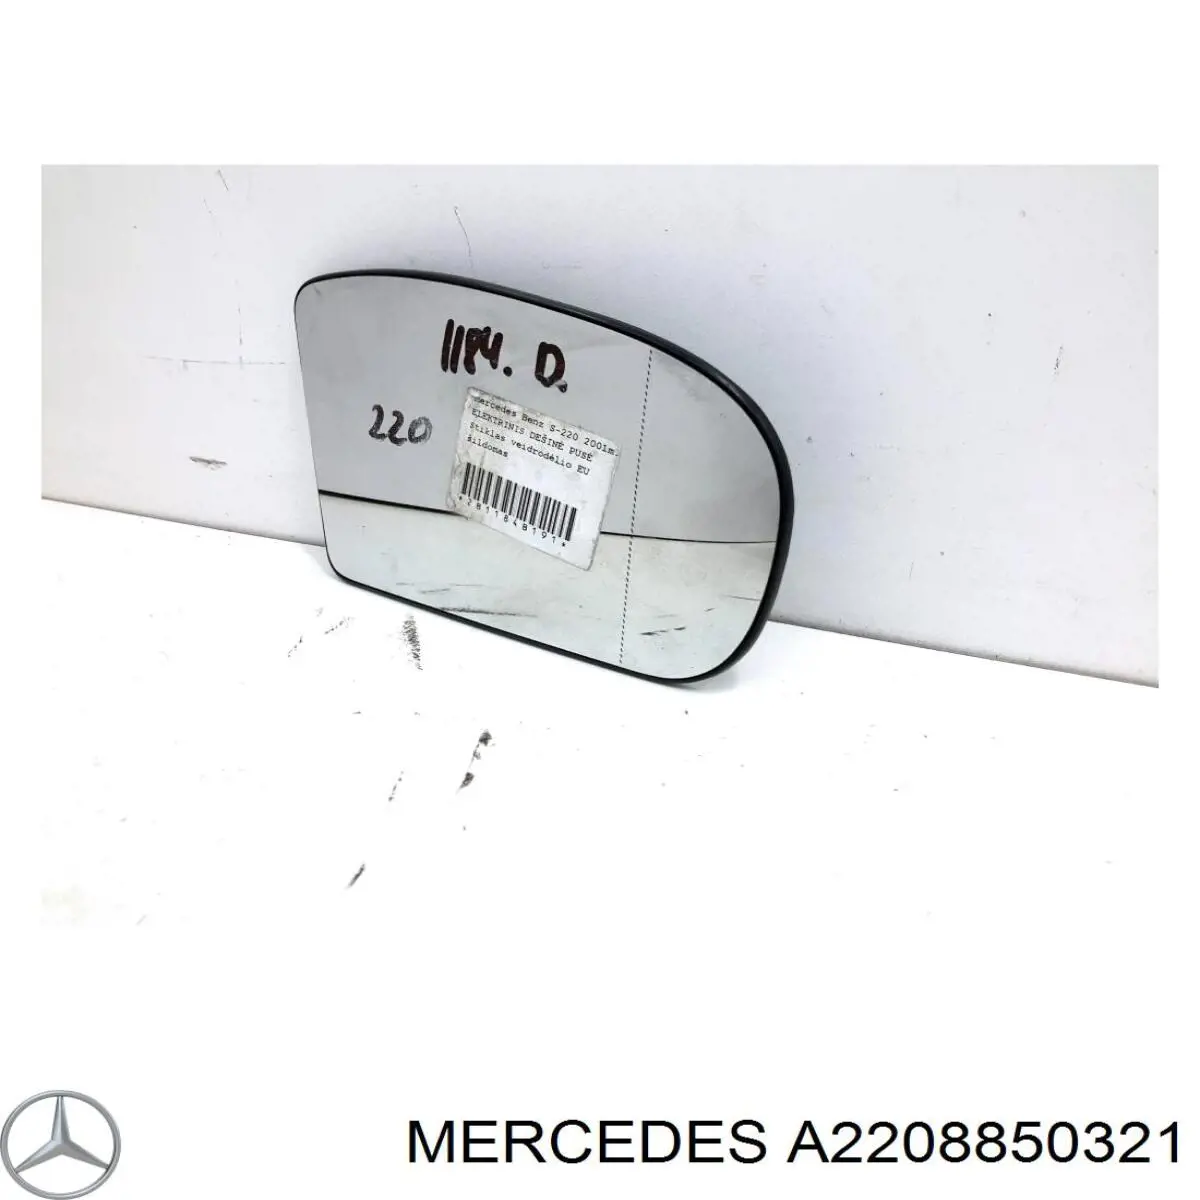 A2208850321 Mercedes moldura de parachoques delantero izquierdo